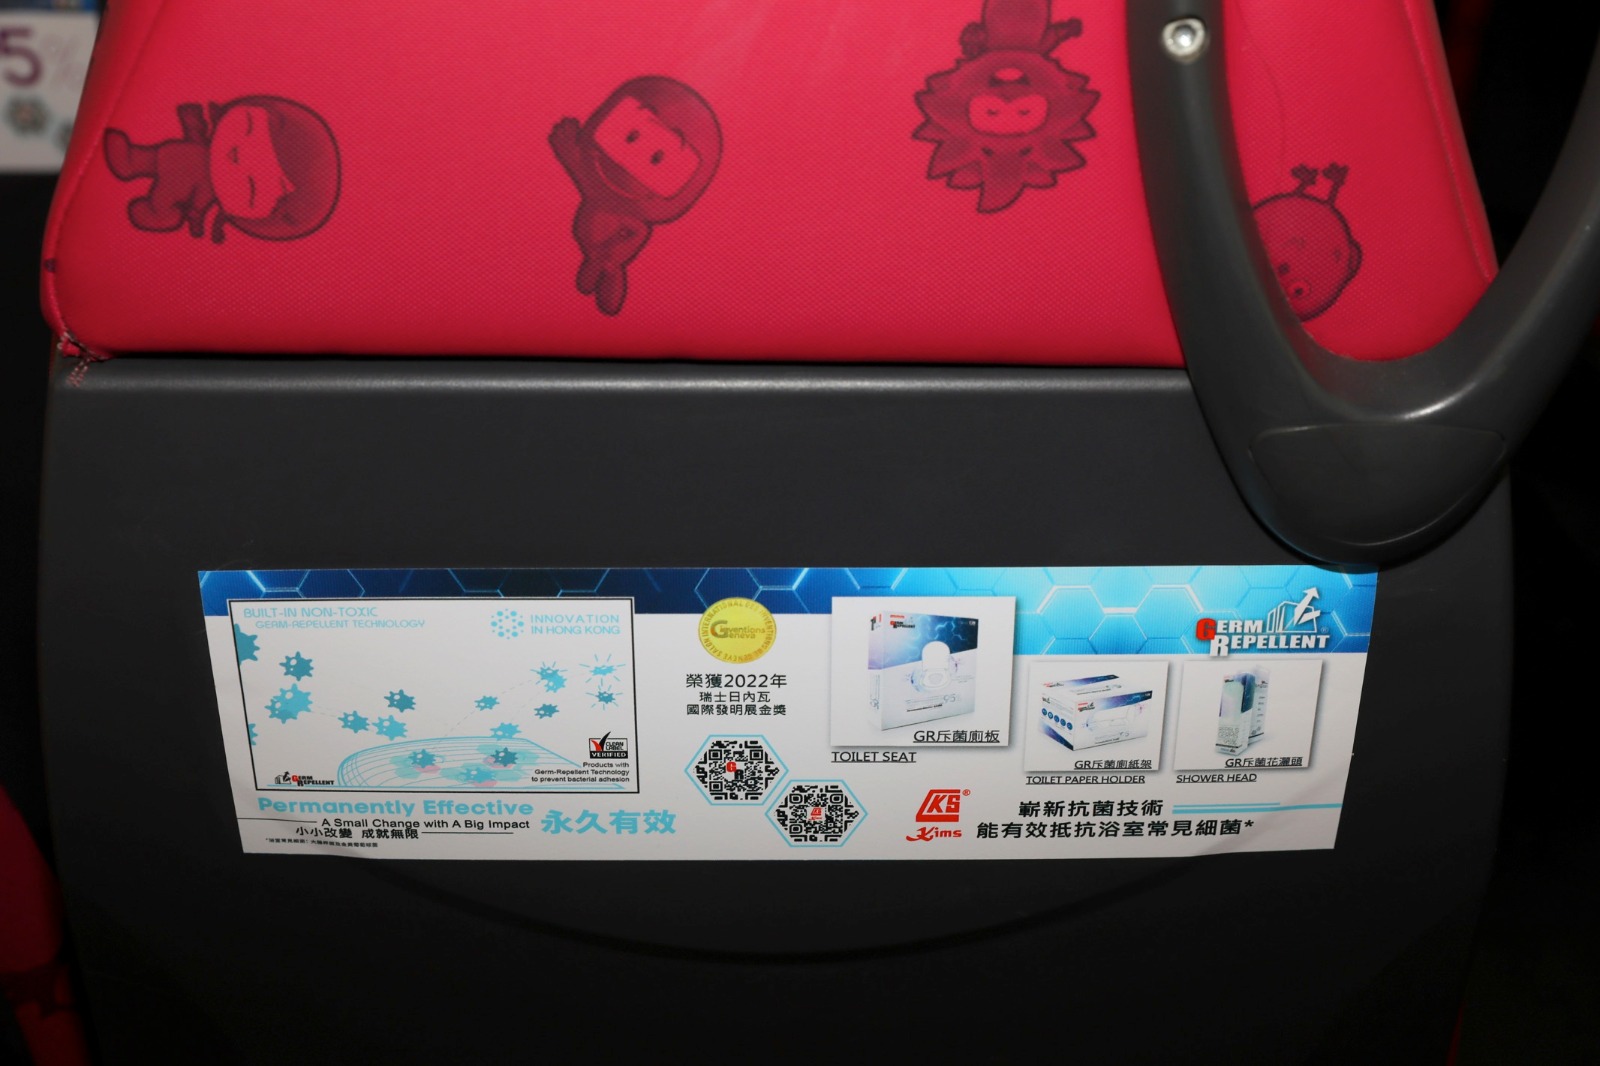 Germ Repellent KMB seat sticker photo